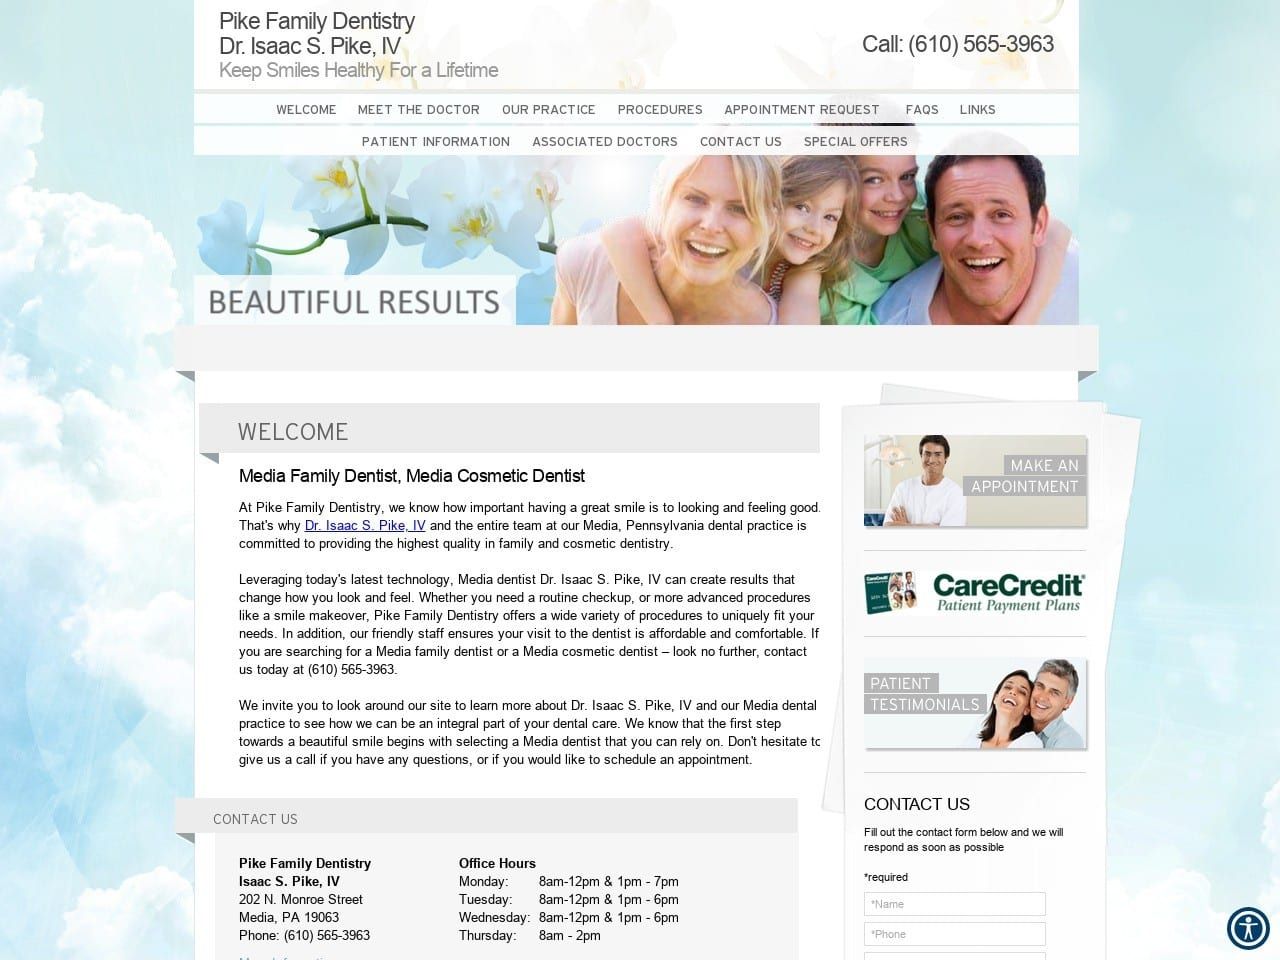 Pike Family Dentist Website Screenshot from pikefamilydentistry.net